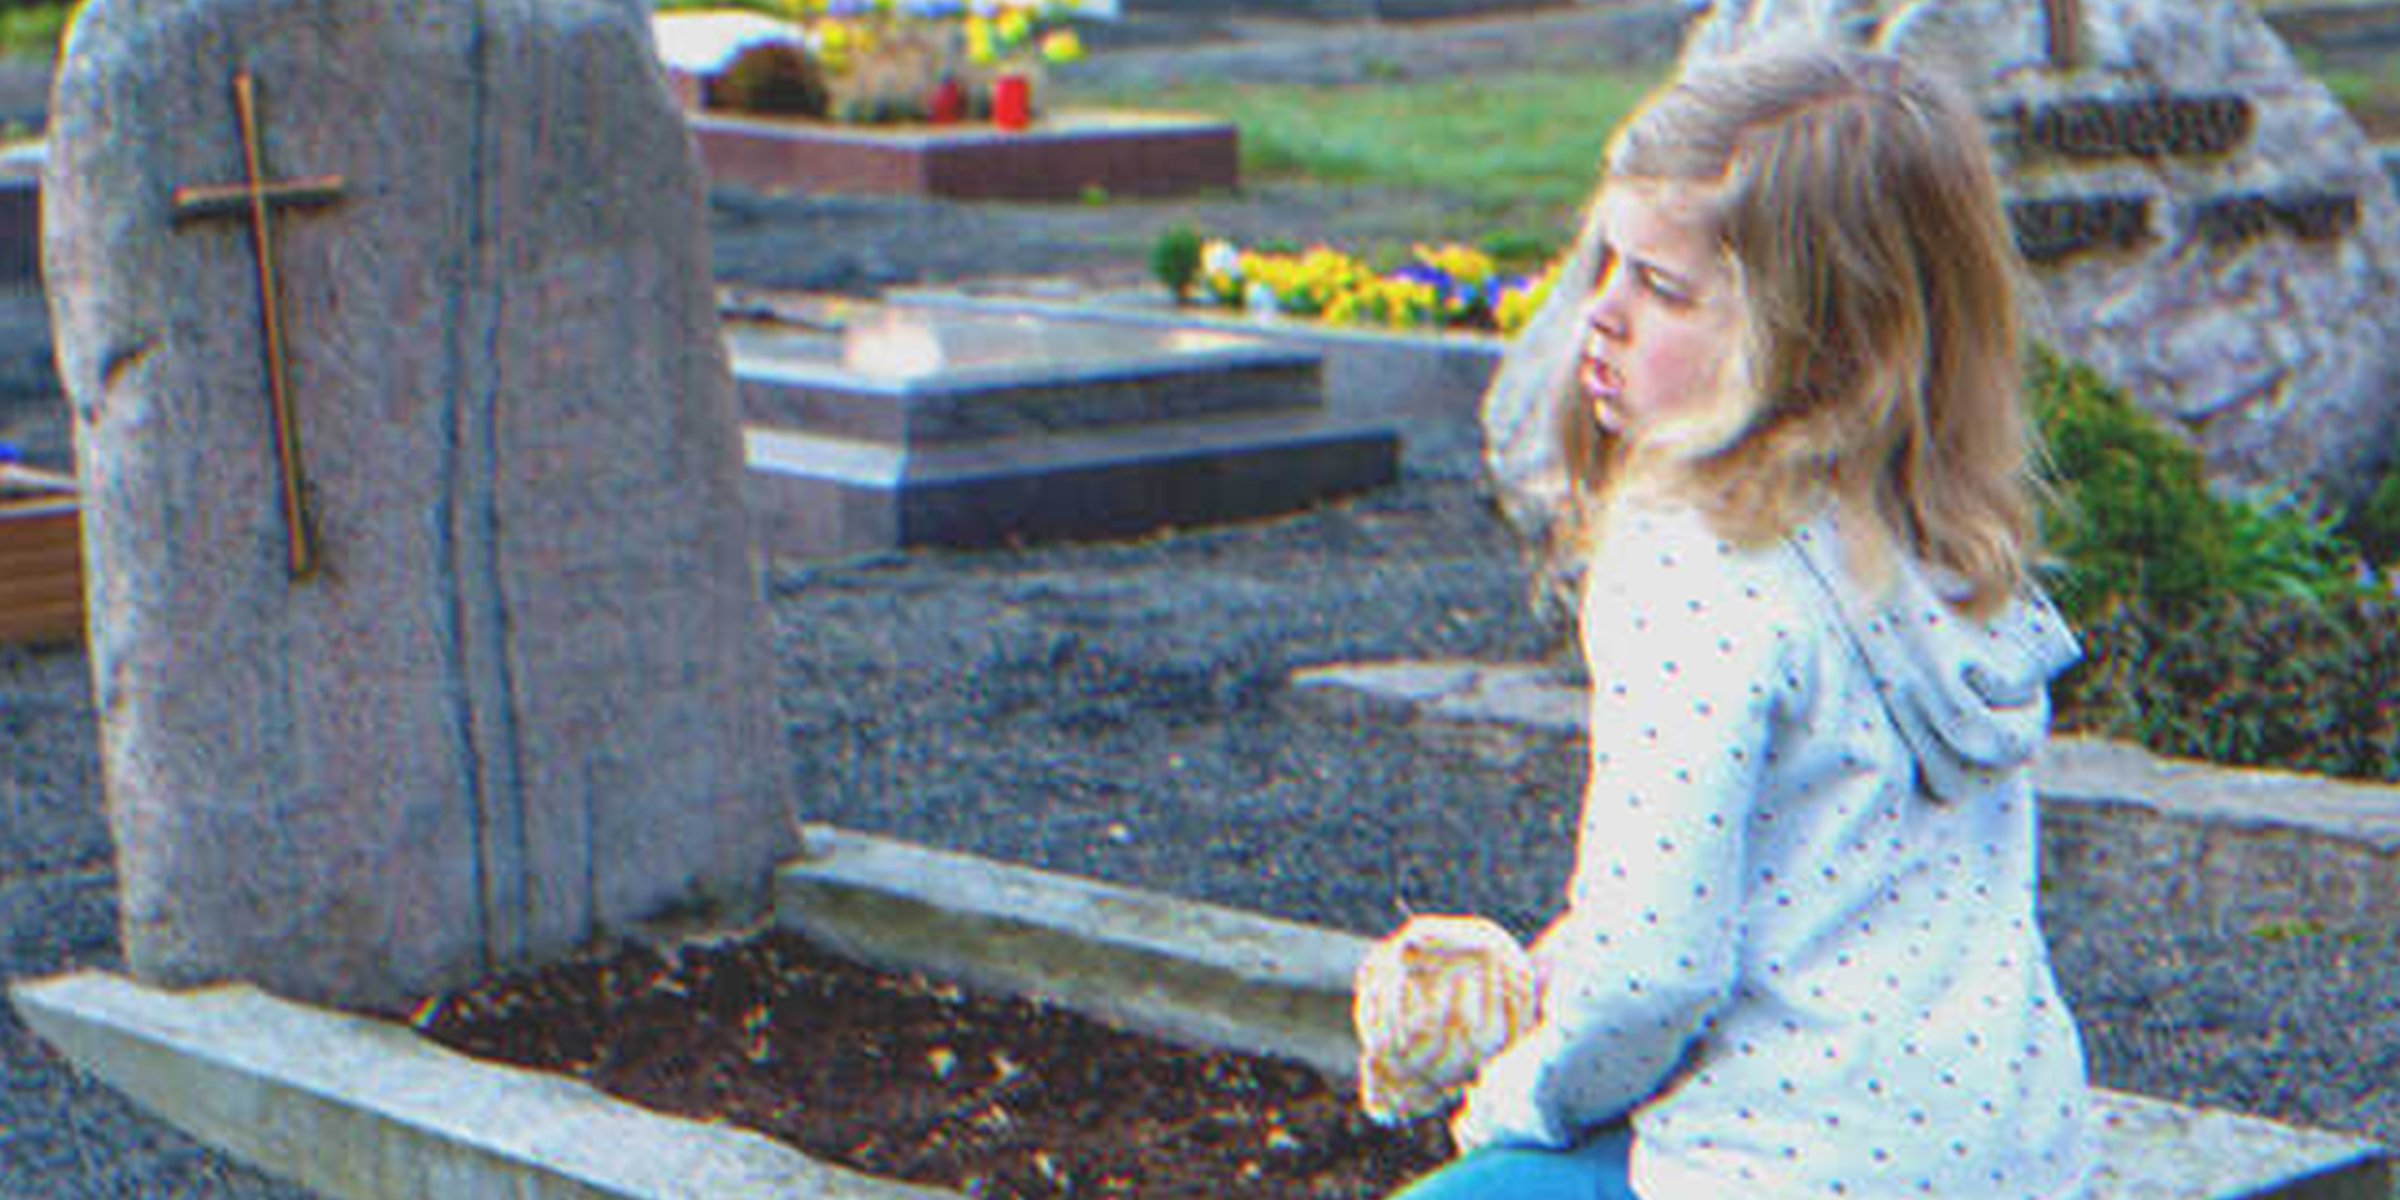 Una niña en una tumba | Foto: Shutterstock